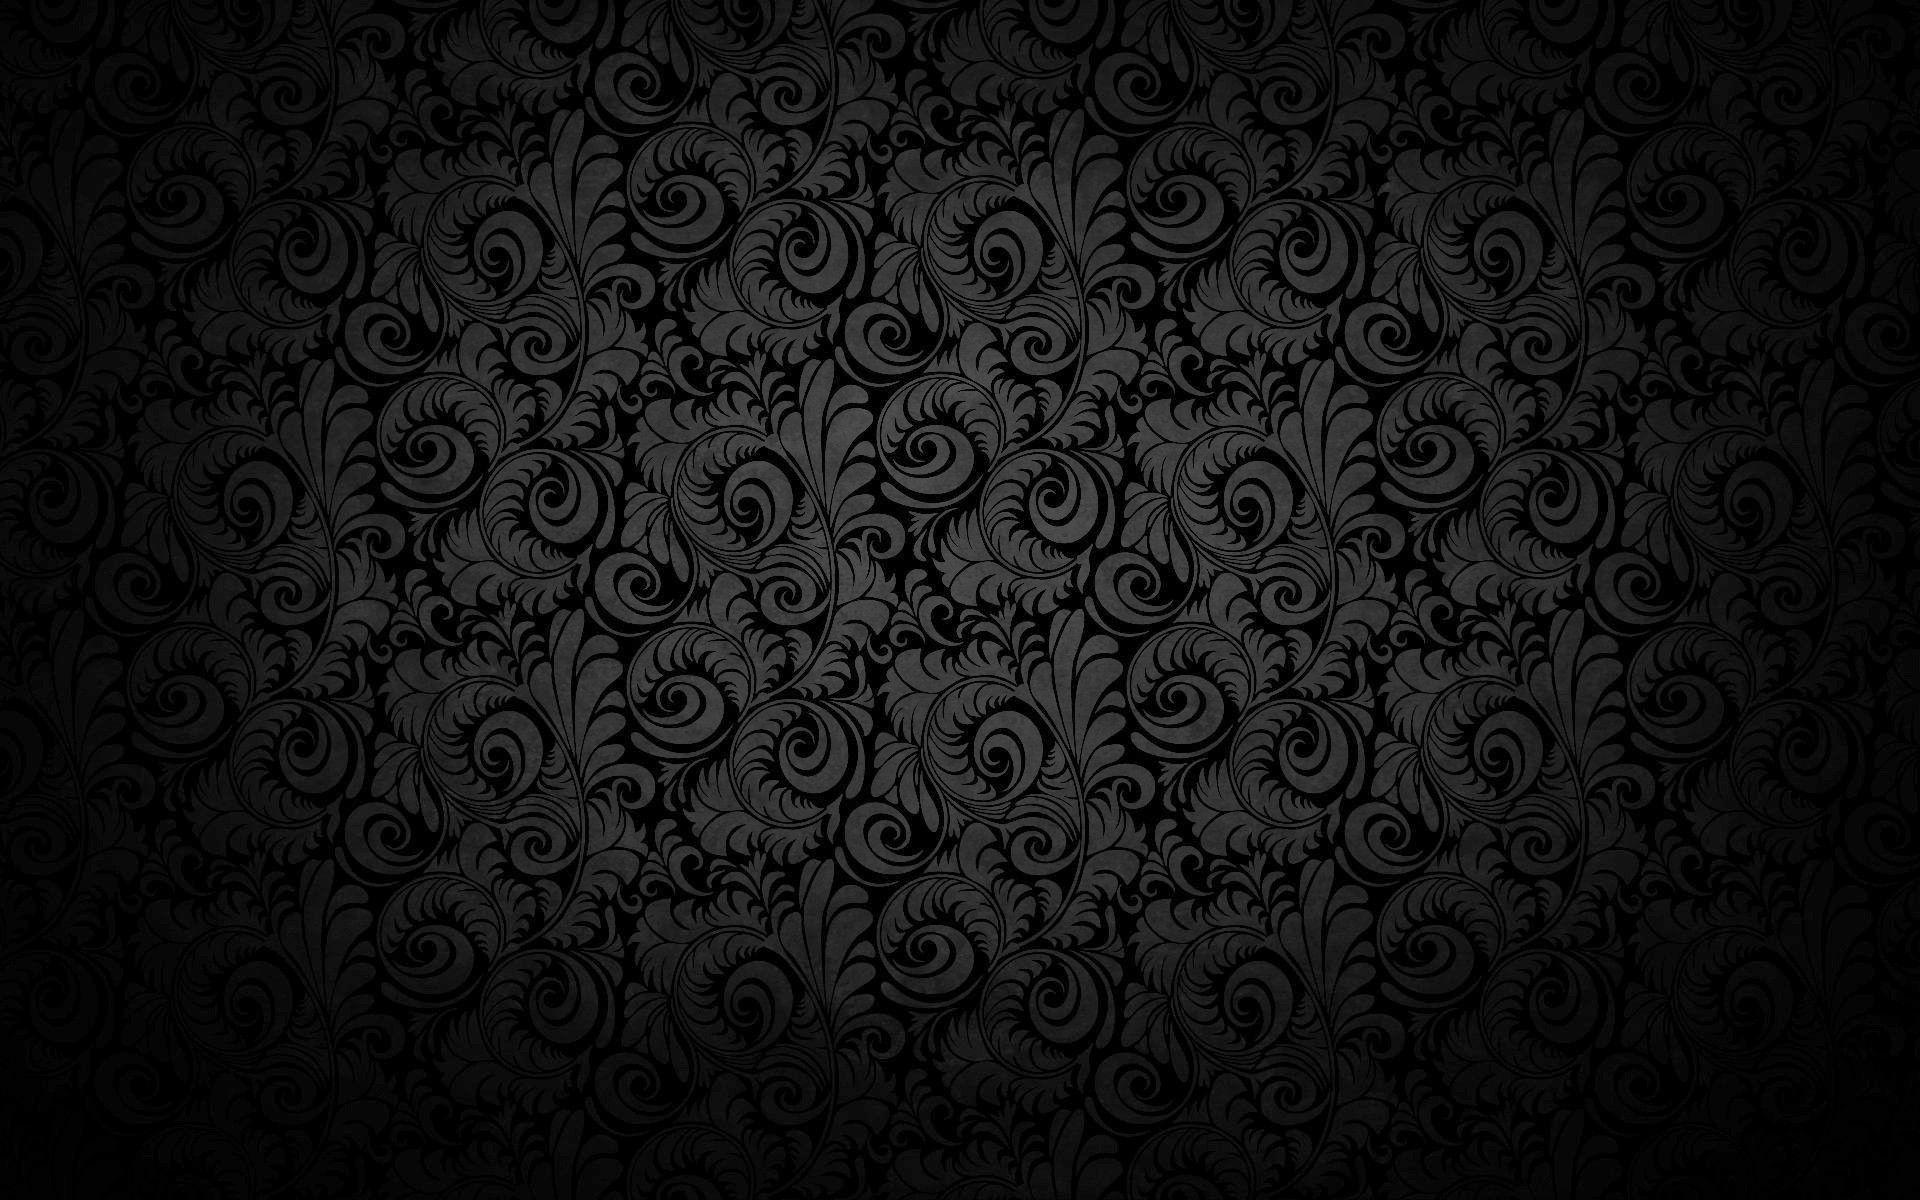 Free Download Cool Black Backgrounds Designs 1920x1200 For Your Desktop Mobile Tablet Explore 77 Cool Black Background Designs Cool Black Background Wallpaper Black Design Background Wallpaper